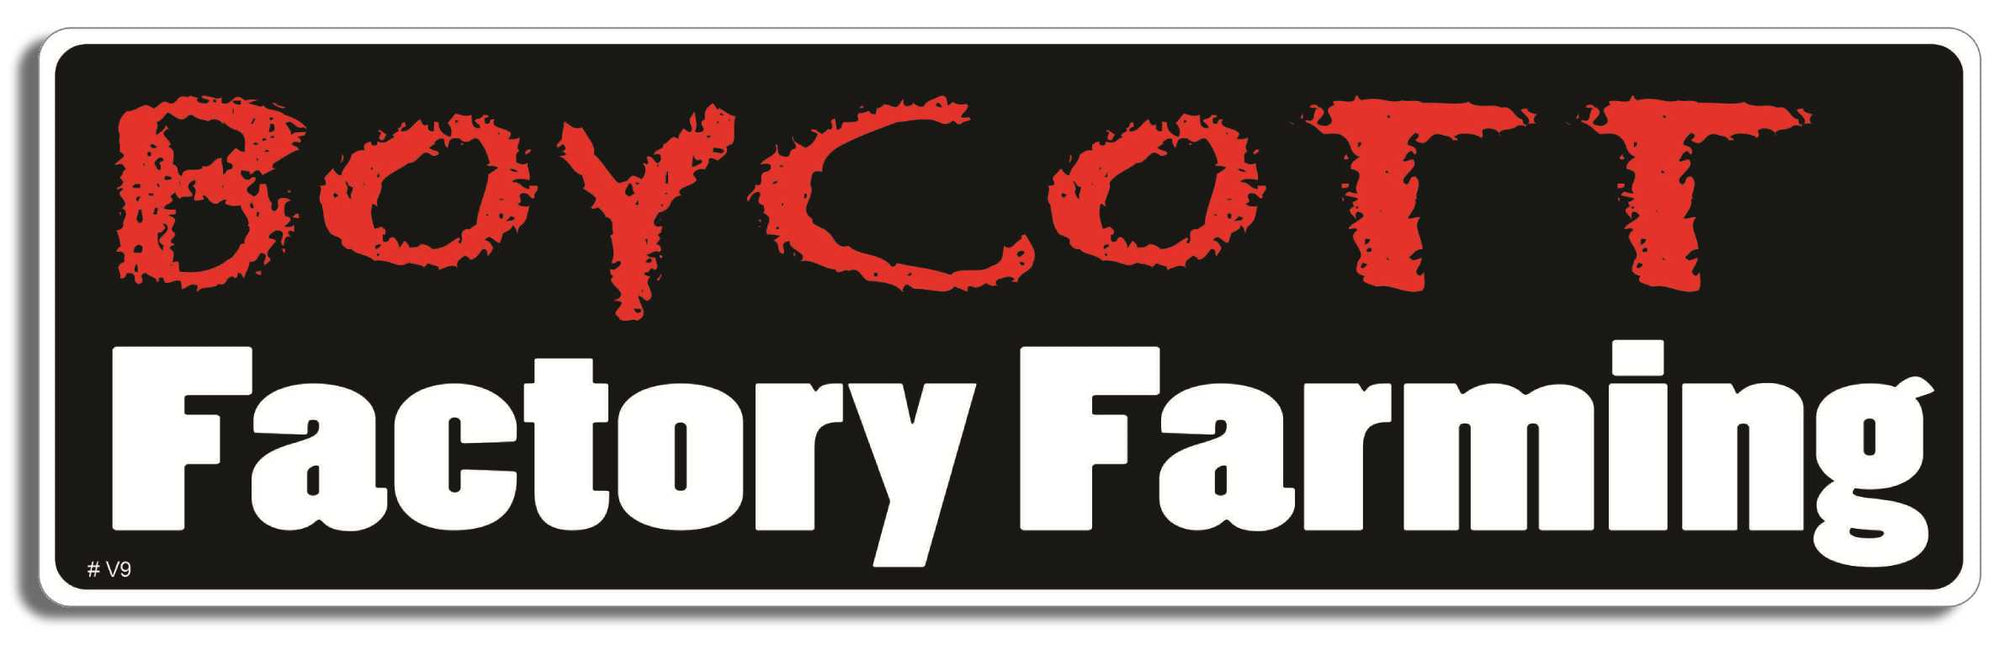 Boycott factory farming - 3" x 10" Bumper Sticker--Car Magnet- -  Decal Bumper Sticker-vagetarian Bumper Sticker Car Magnet Boycott factory farming-  Decal for carsanimal rights, peta, vegan, vegetarian